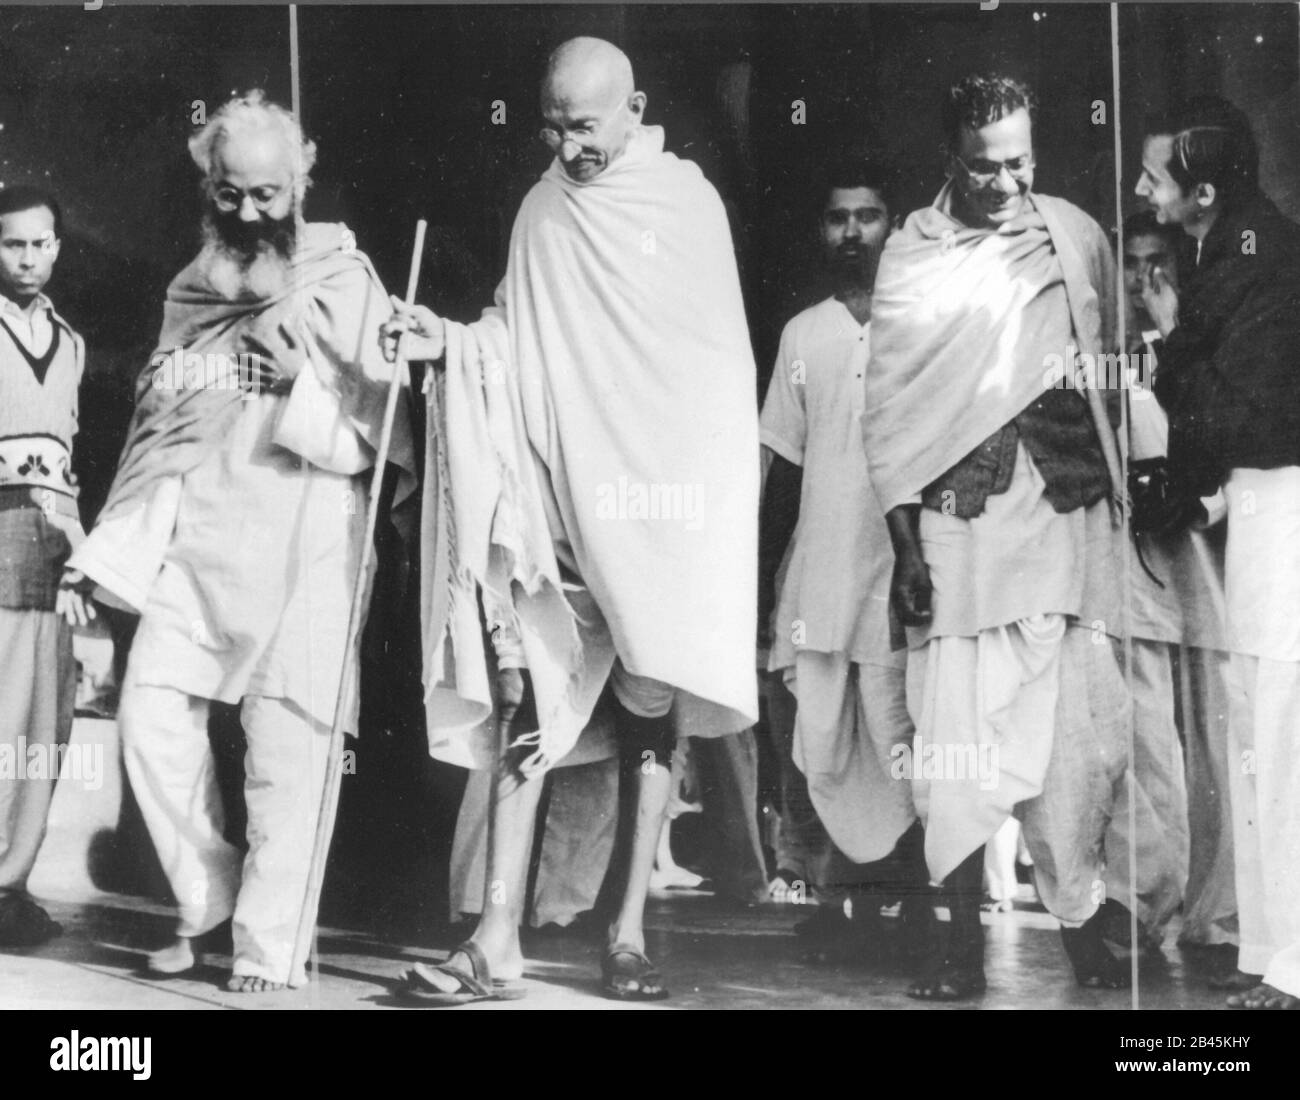 Mahatma Gandhi walking with walking stick with associates, India, 1940s ...